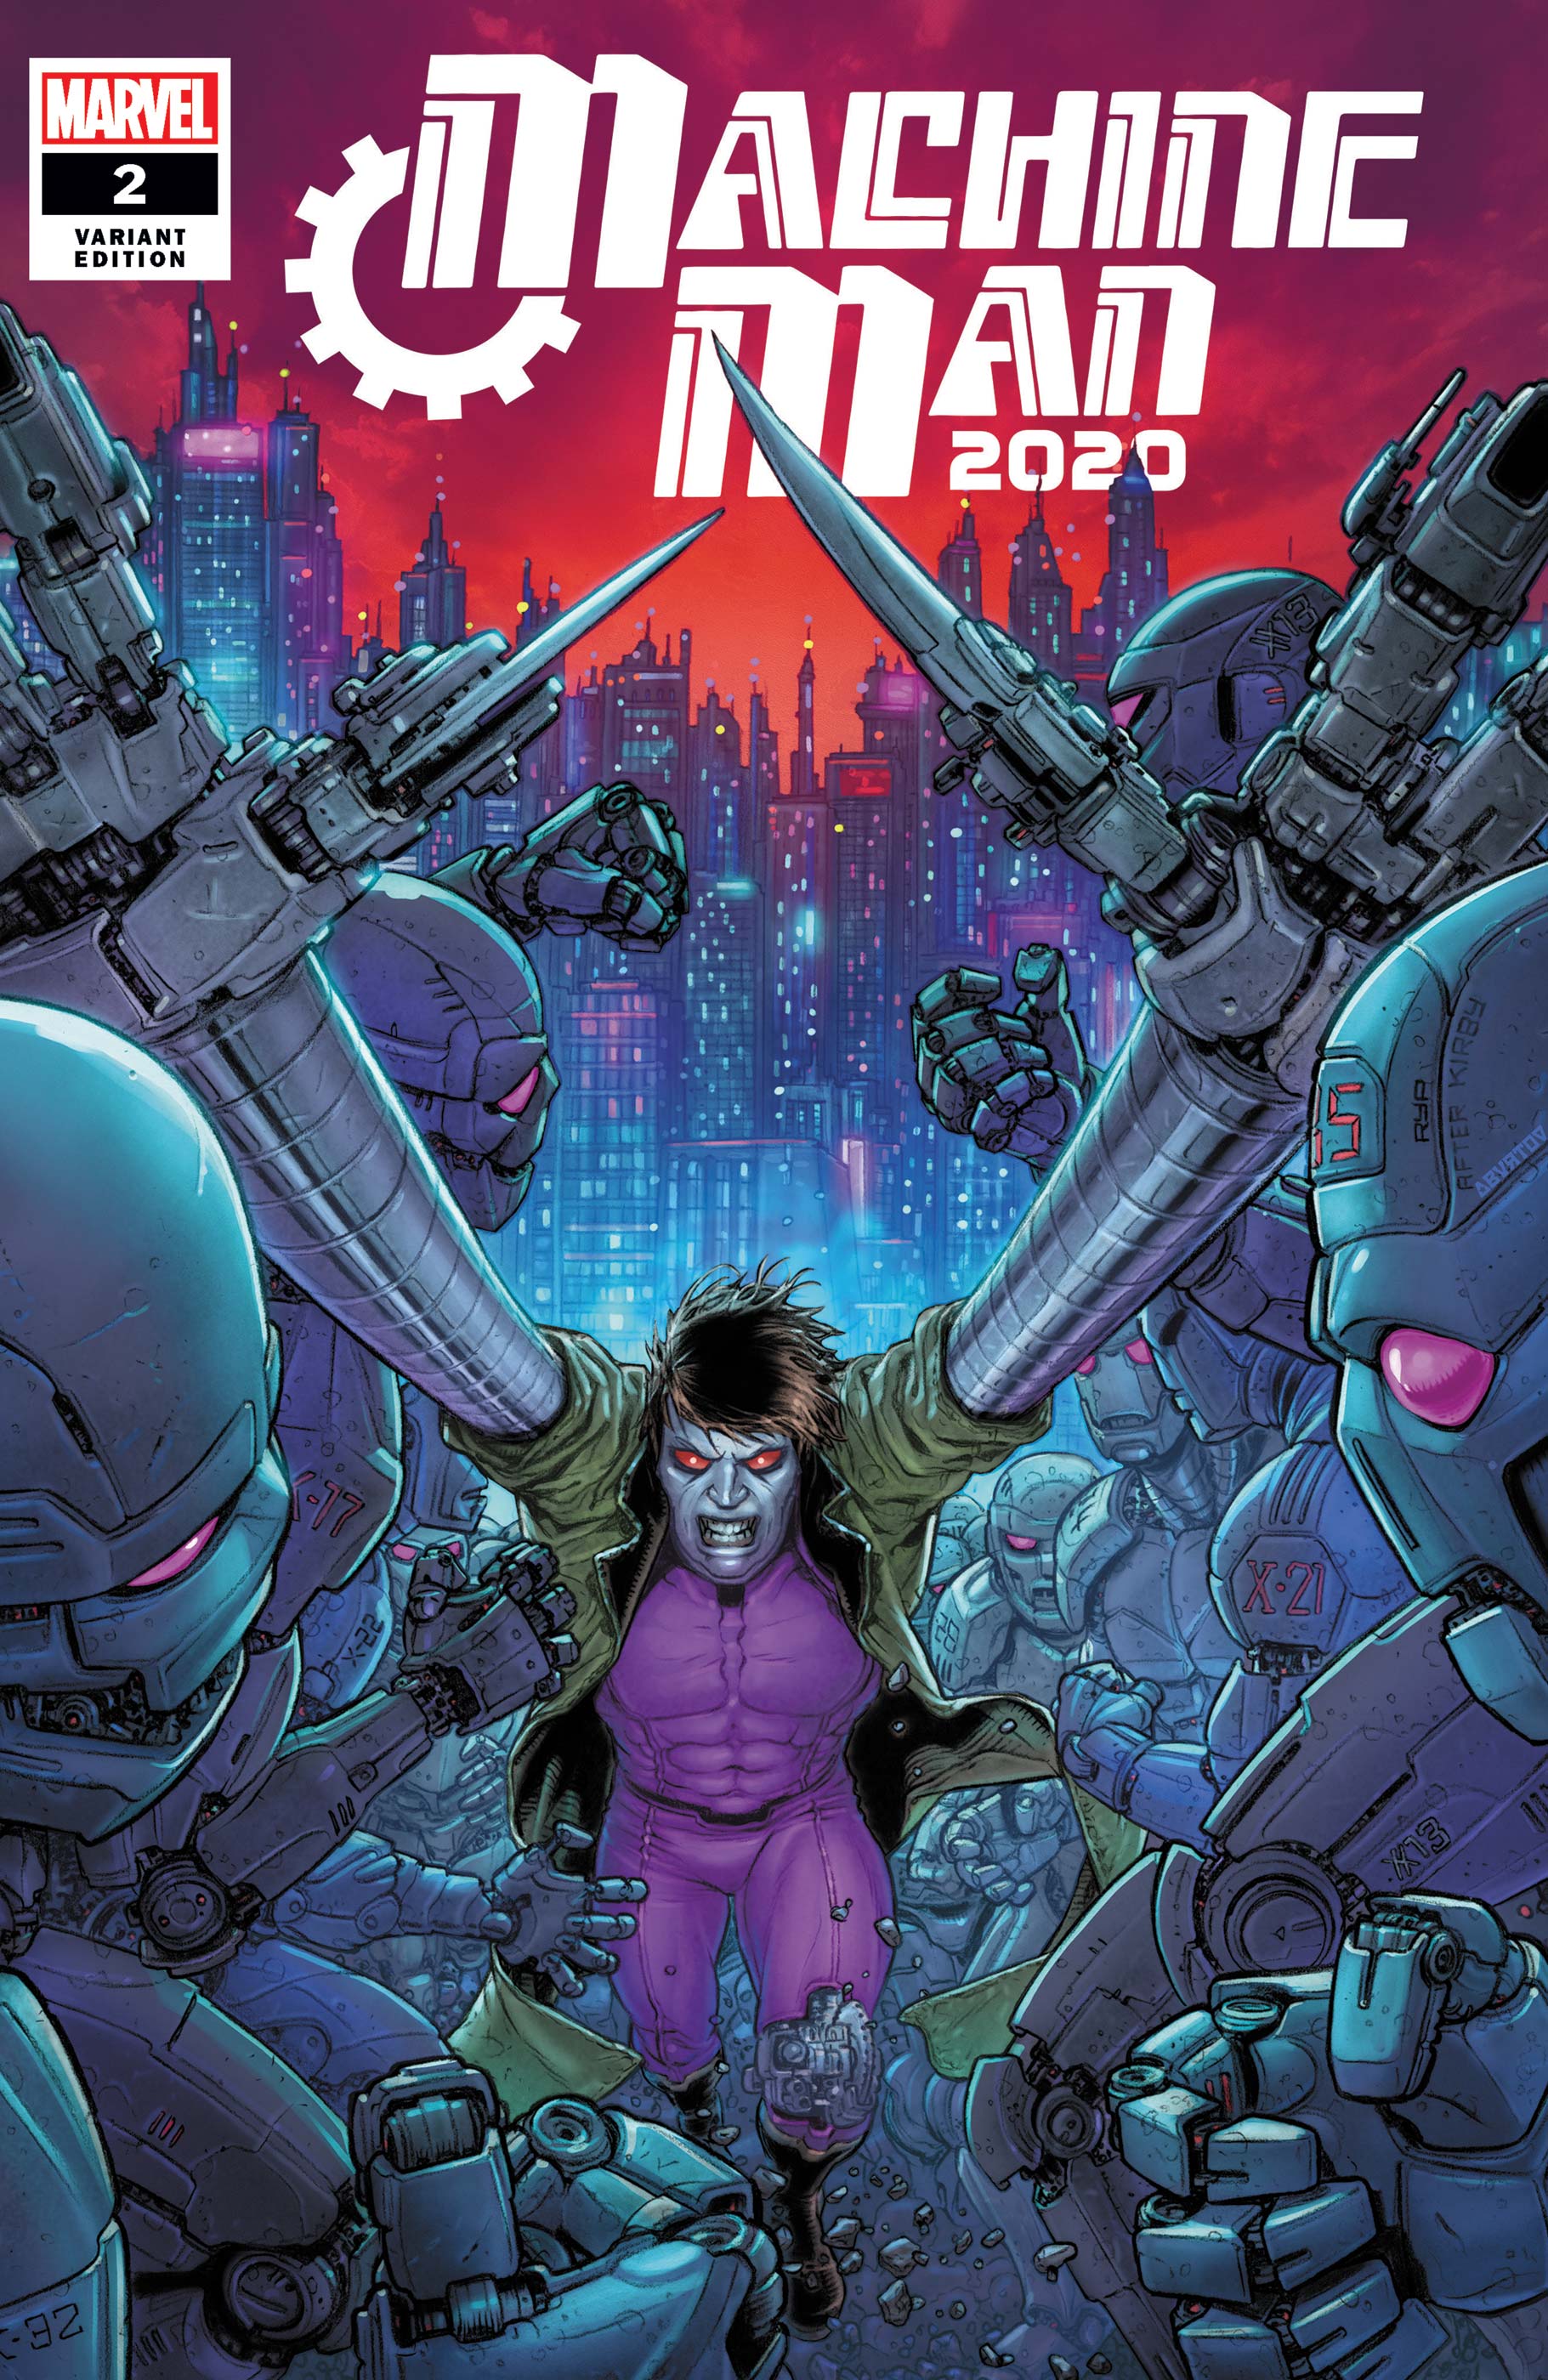 2020 Machine Man (2020) #2 (Variant)